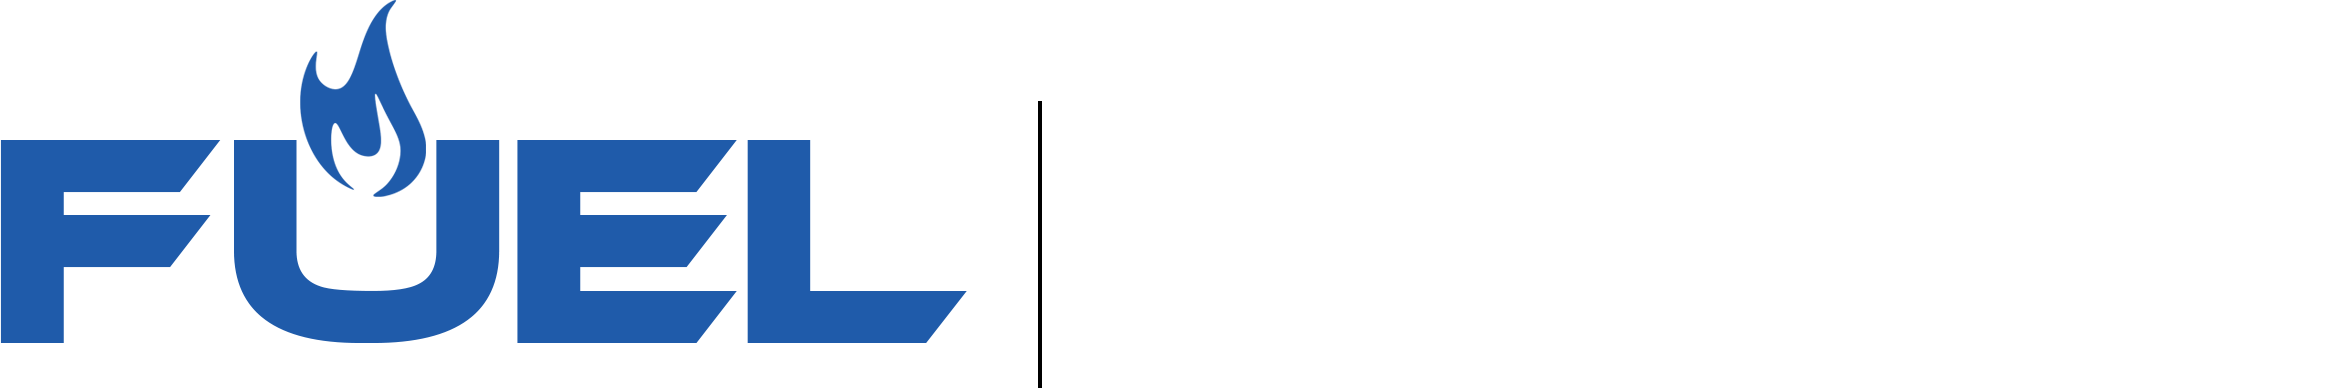 ff-logo-horizontal-white